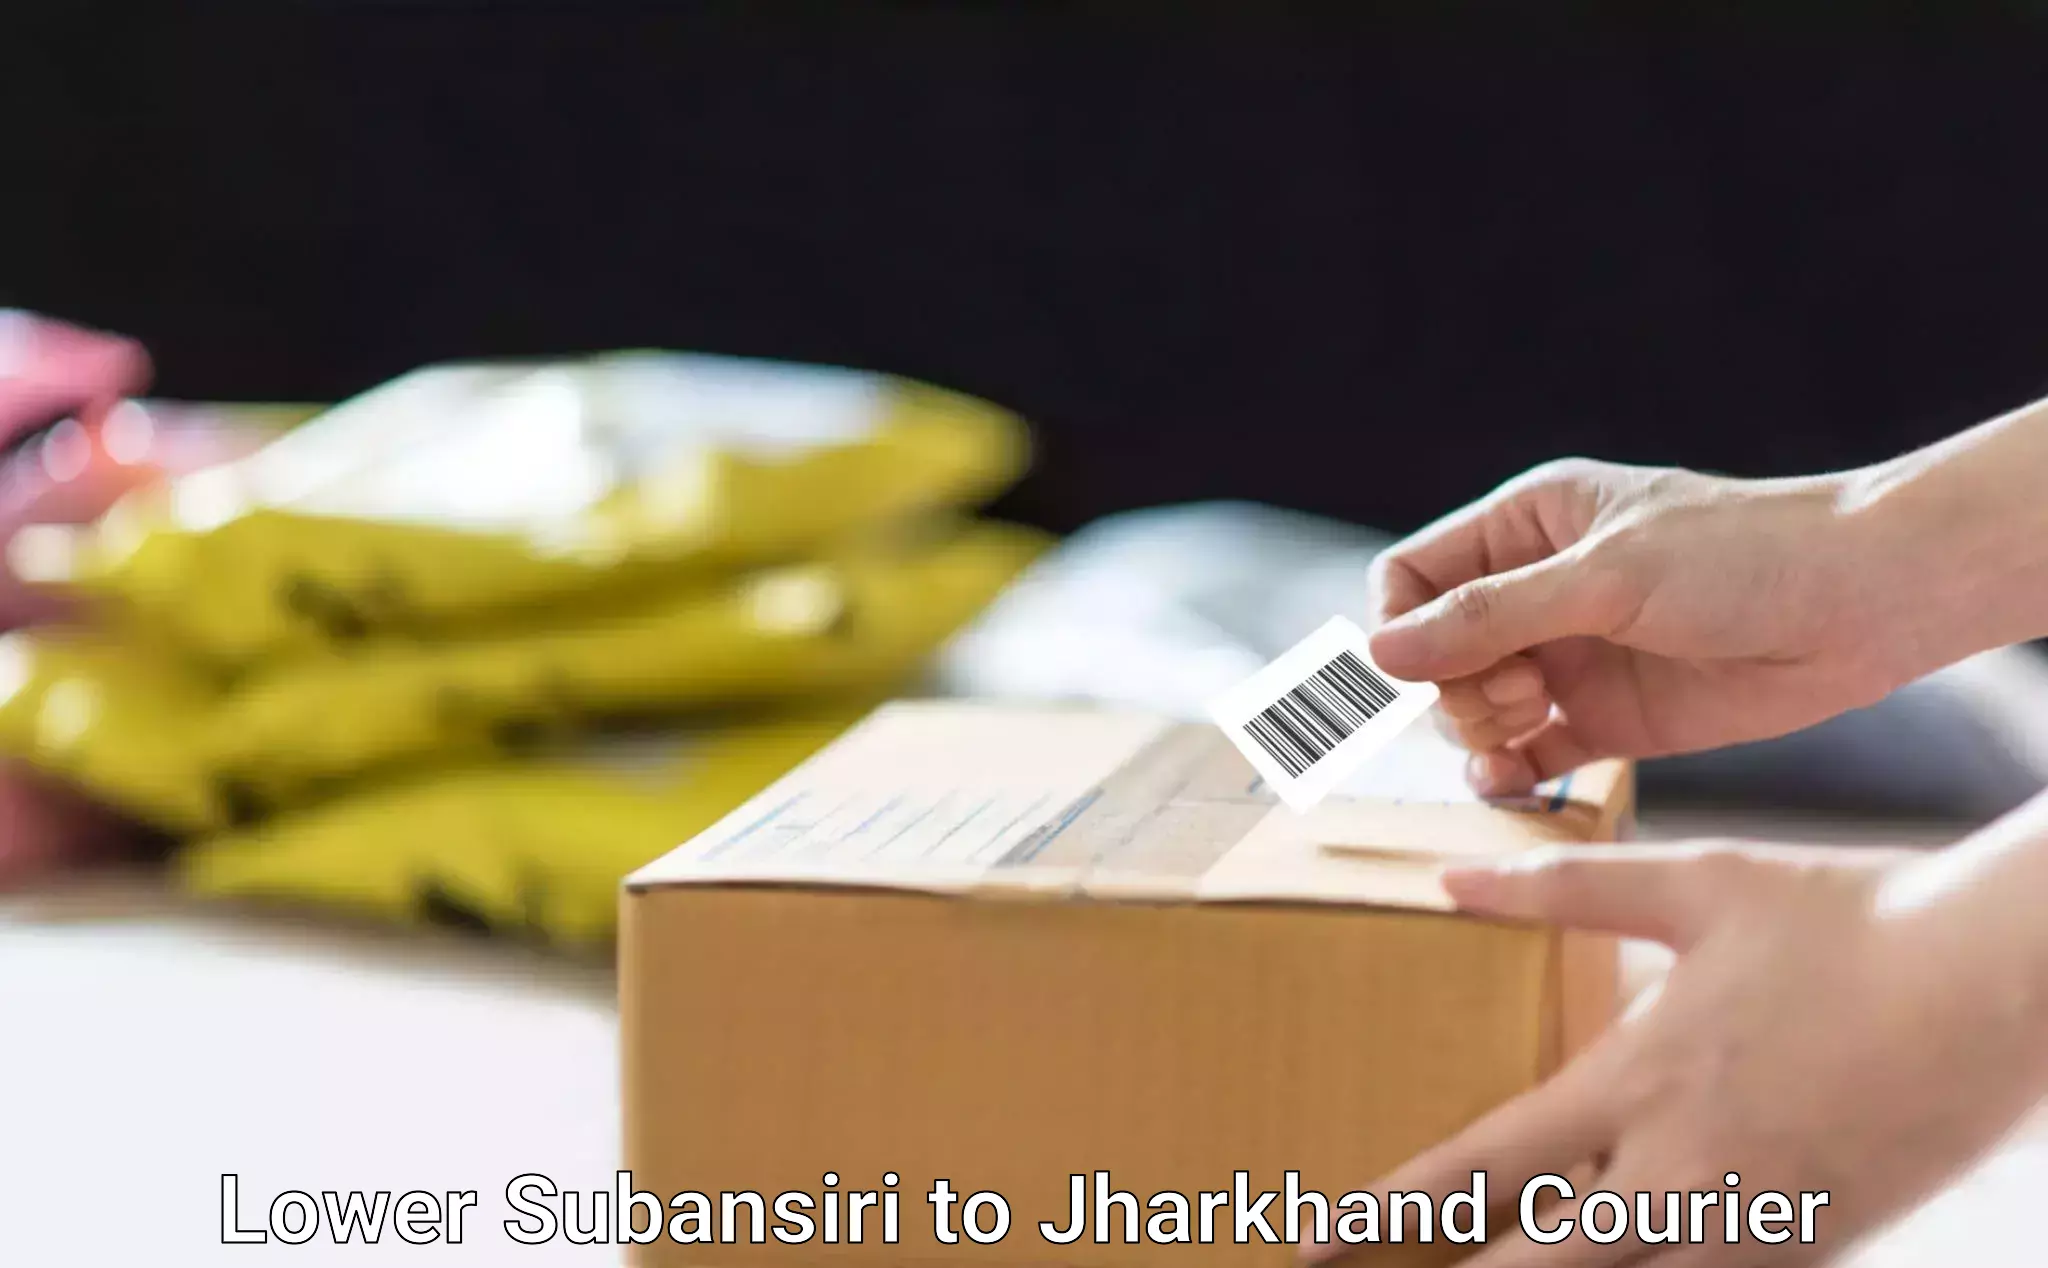 Global logistics network Lower Subansiri to Jharkhand